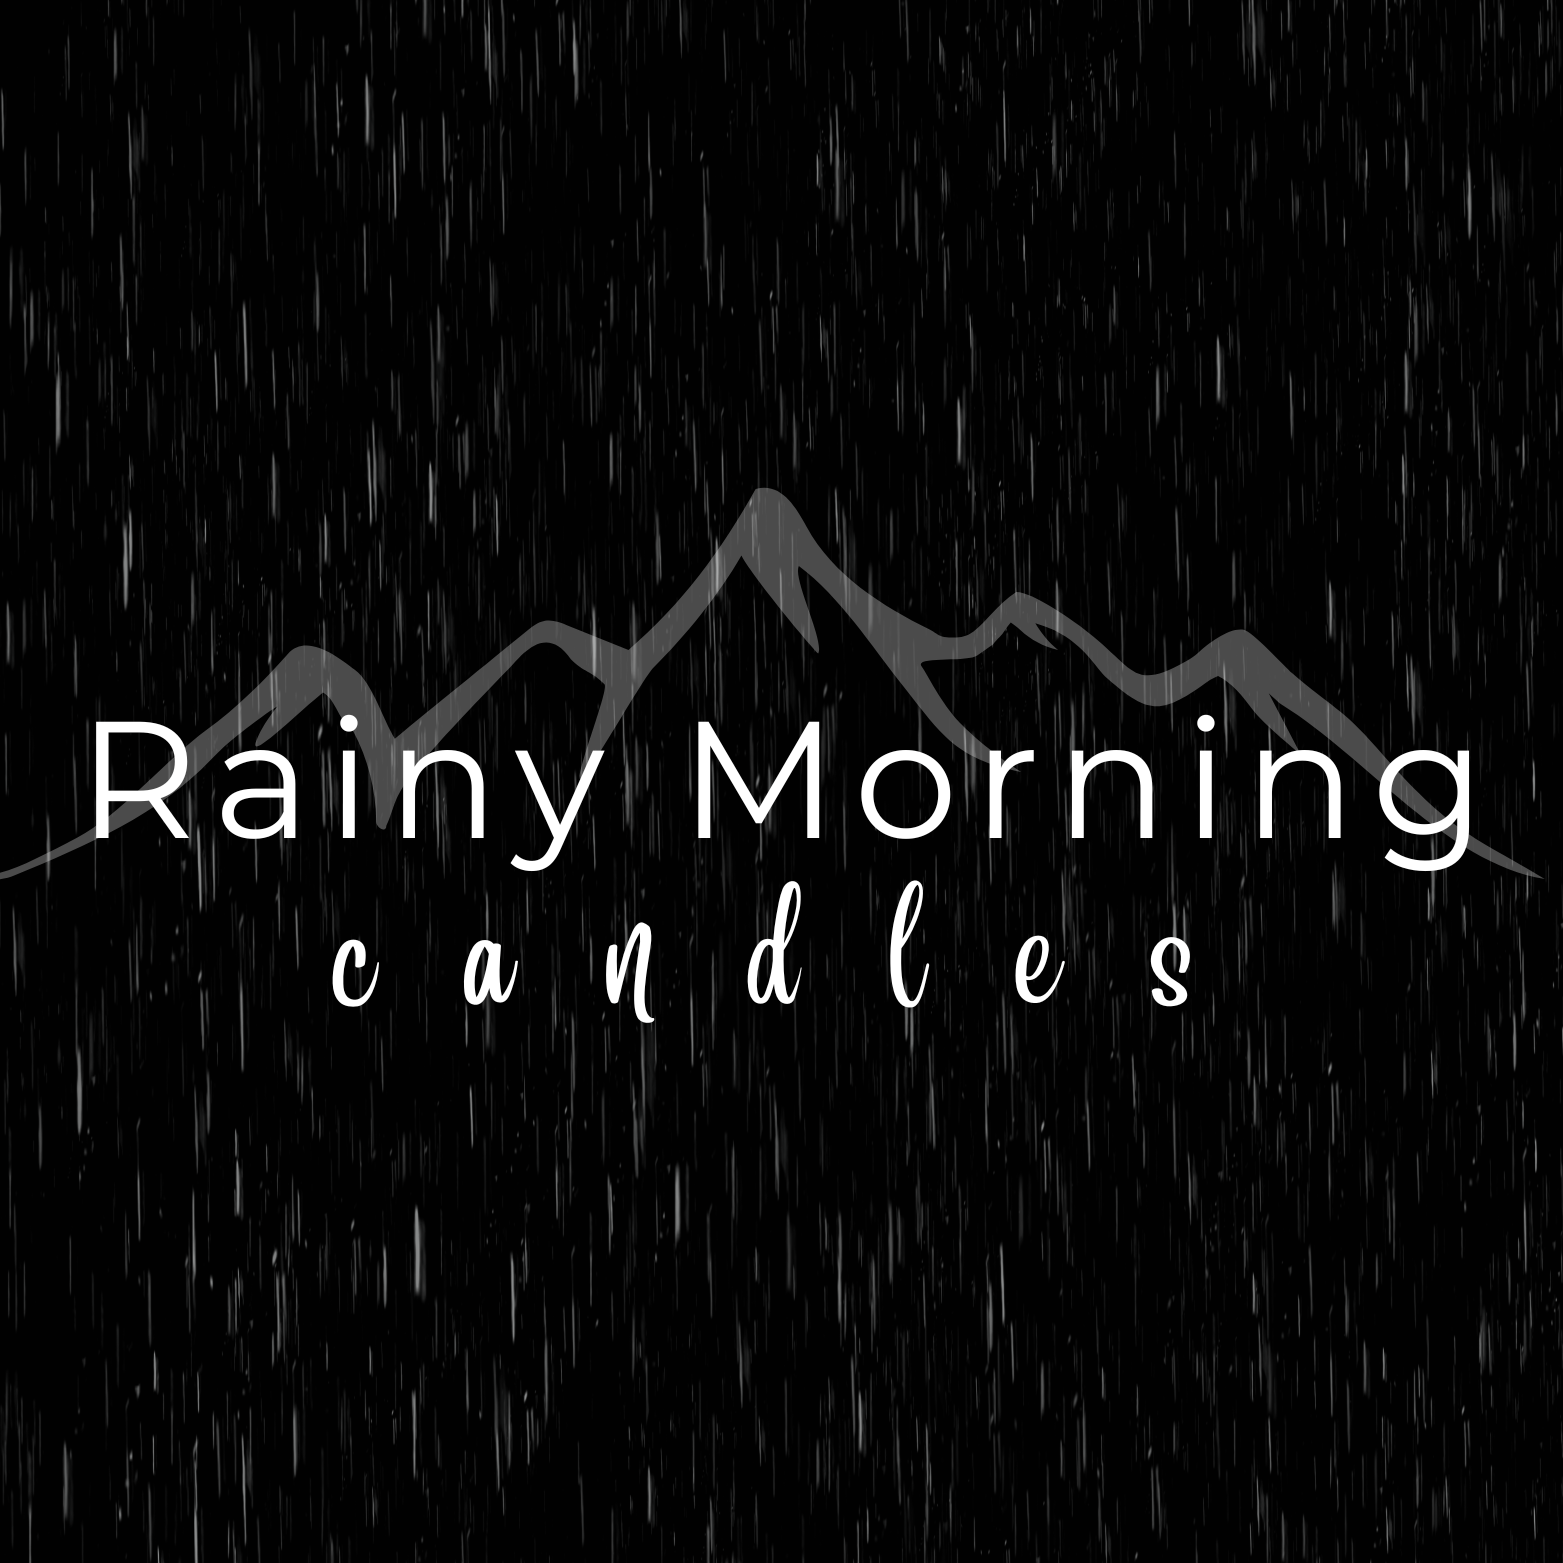 Rainy Morning Candles 